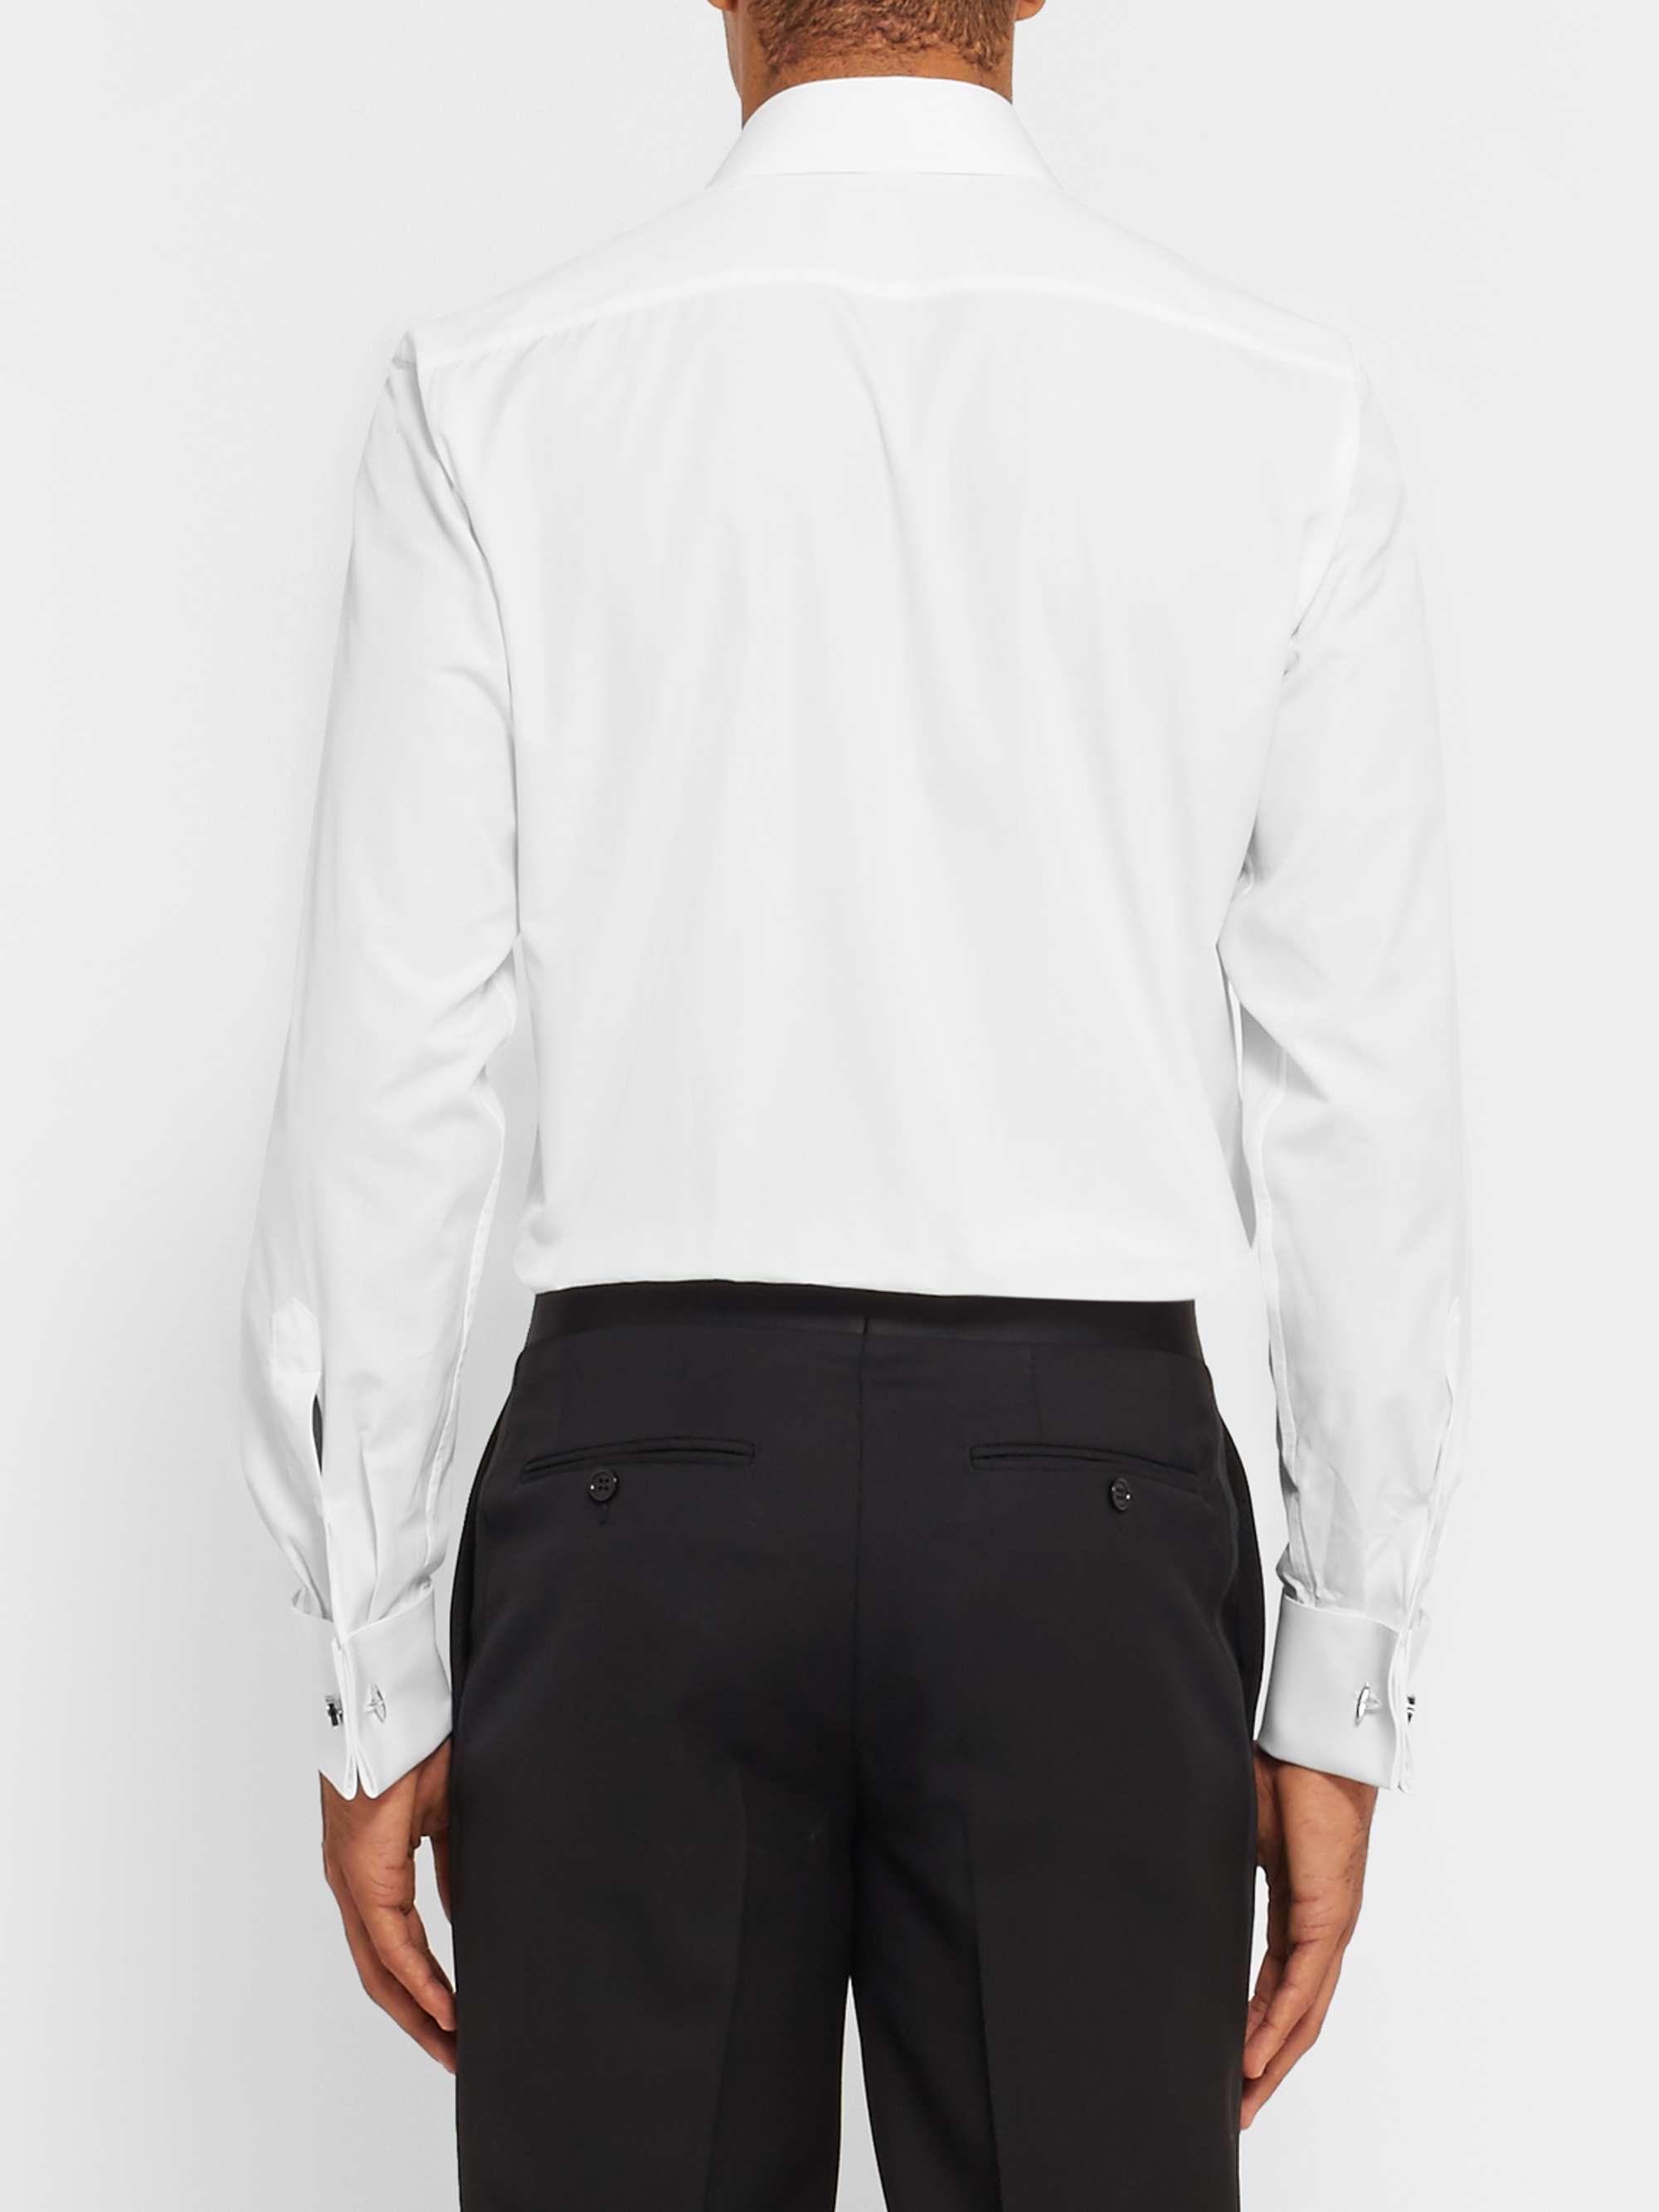 CANALI White Double-Cuff Cotton-Piqué Tuxedo Shirt